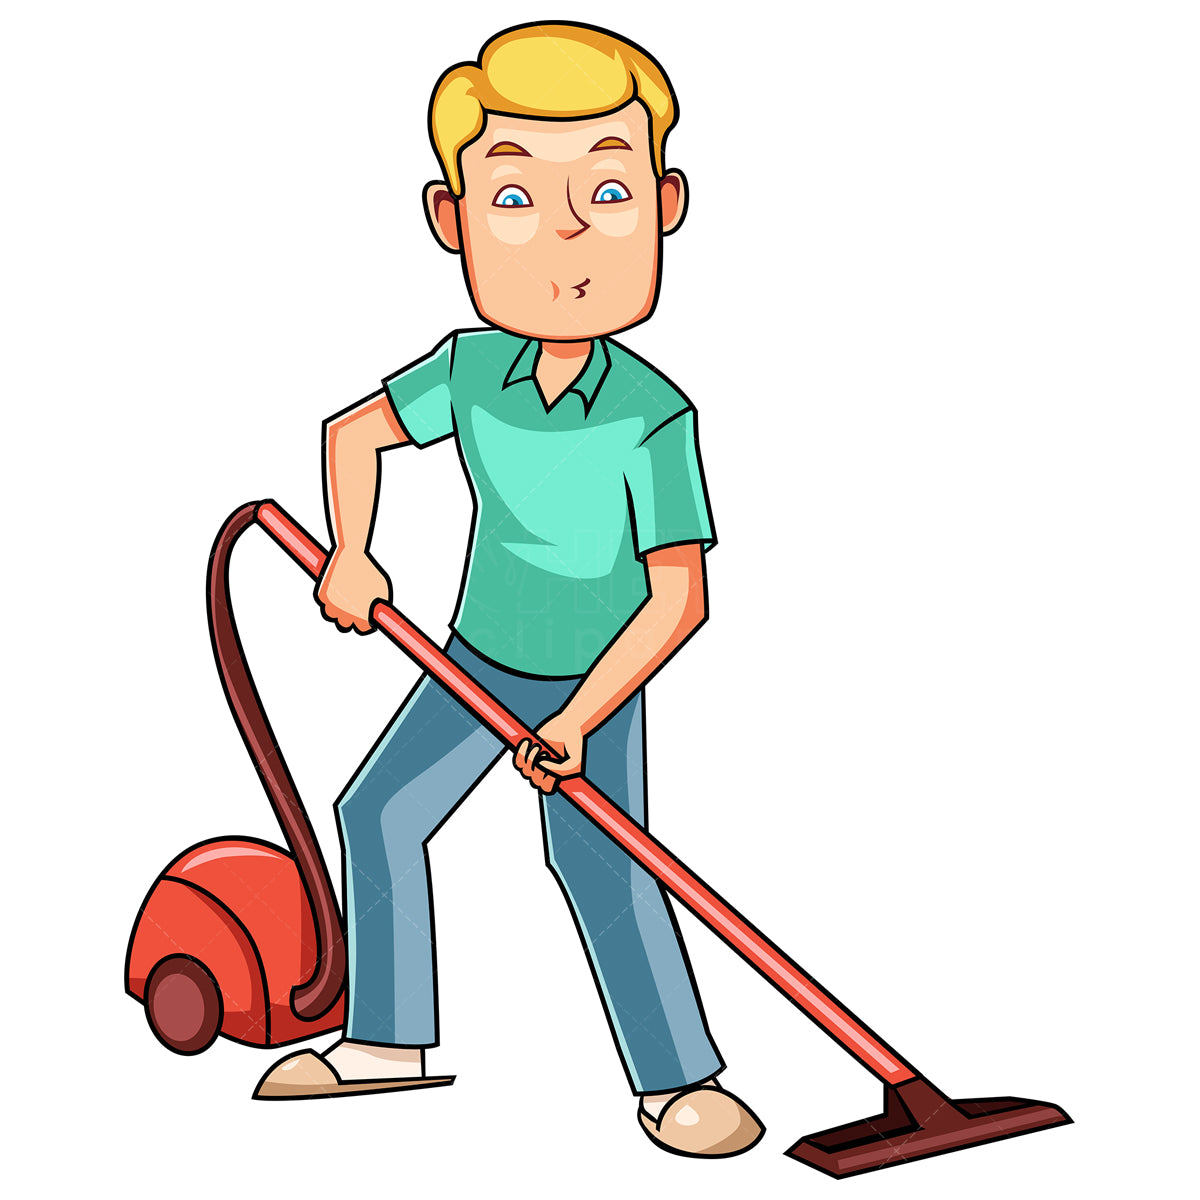 Royalty-free stock vector illustration of a man using vacuum.